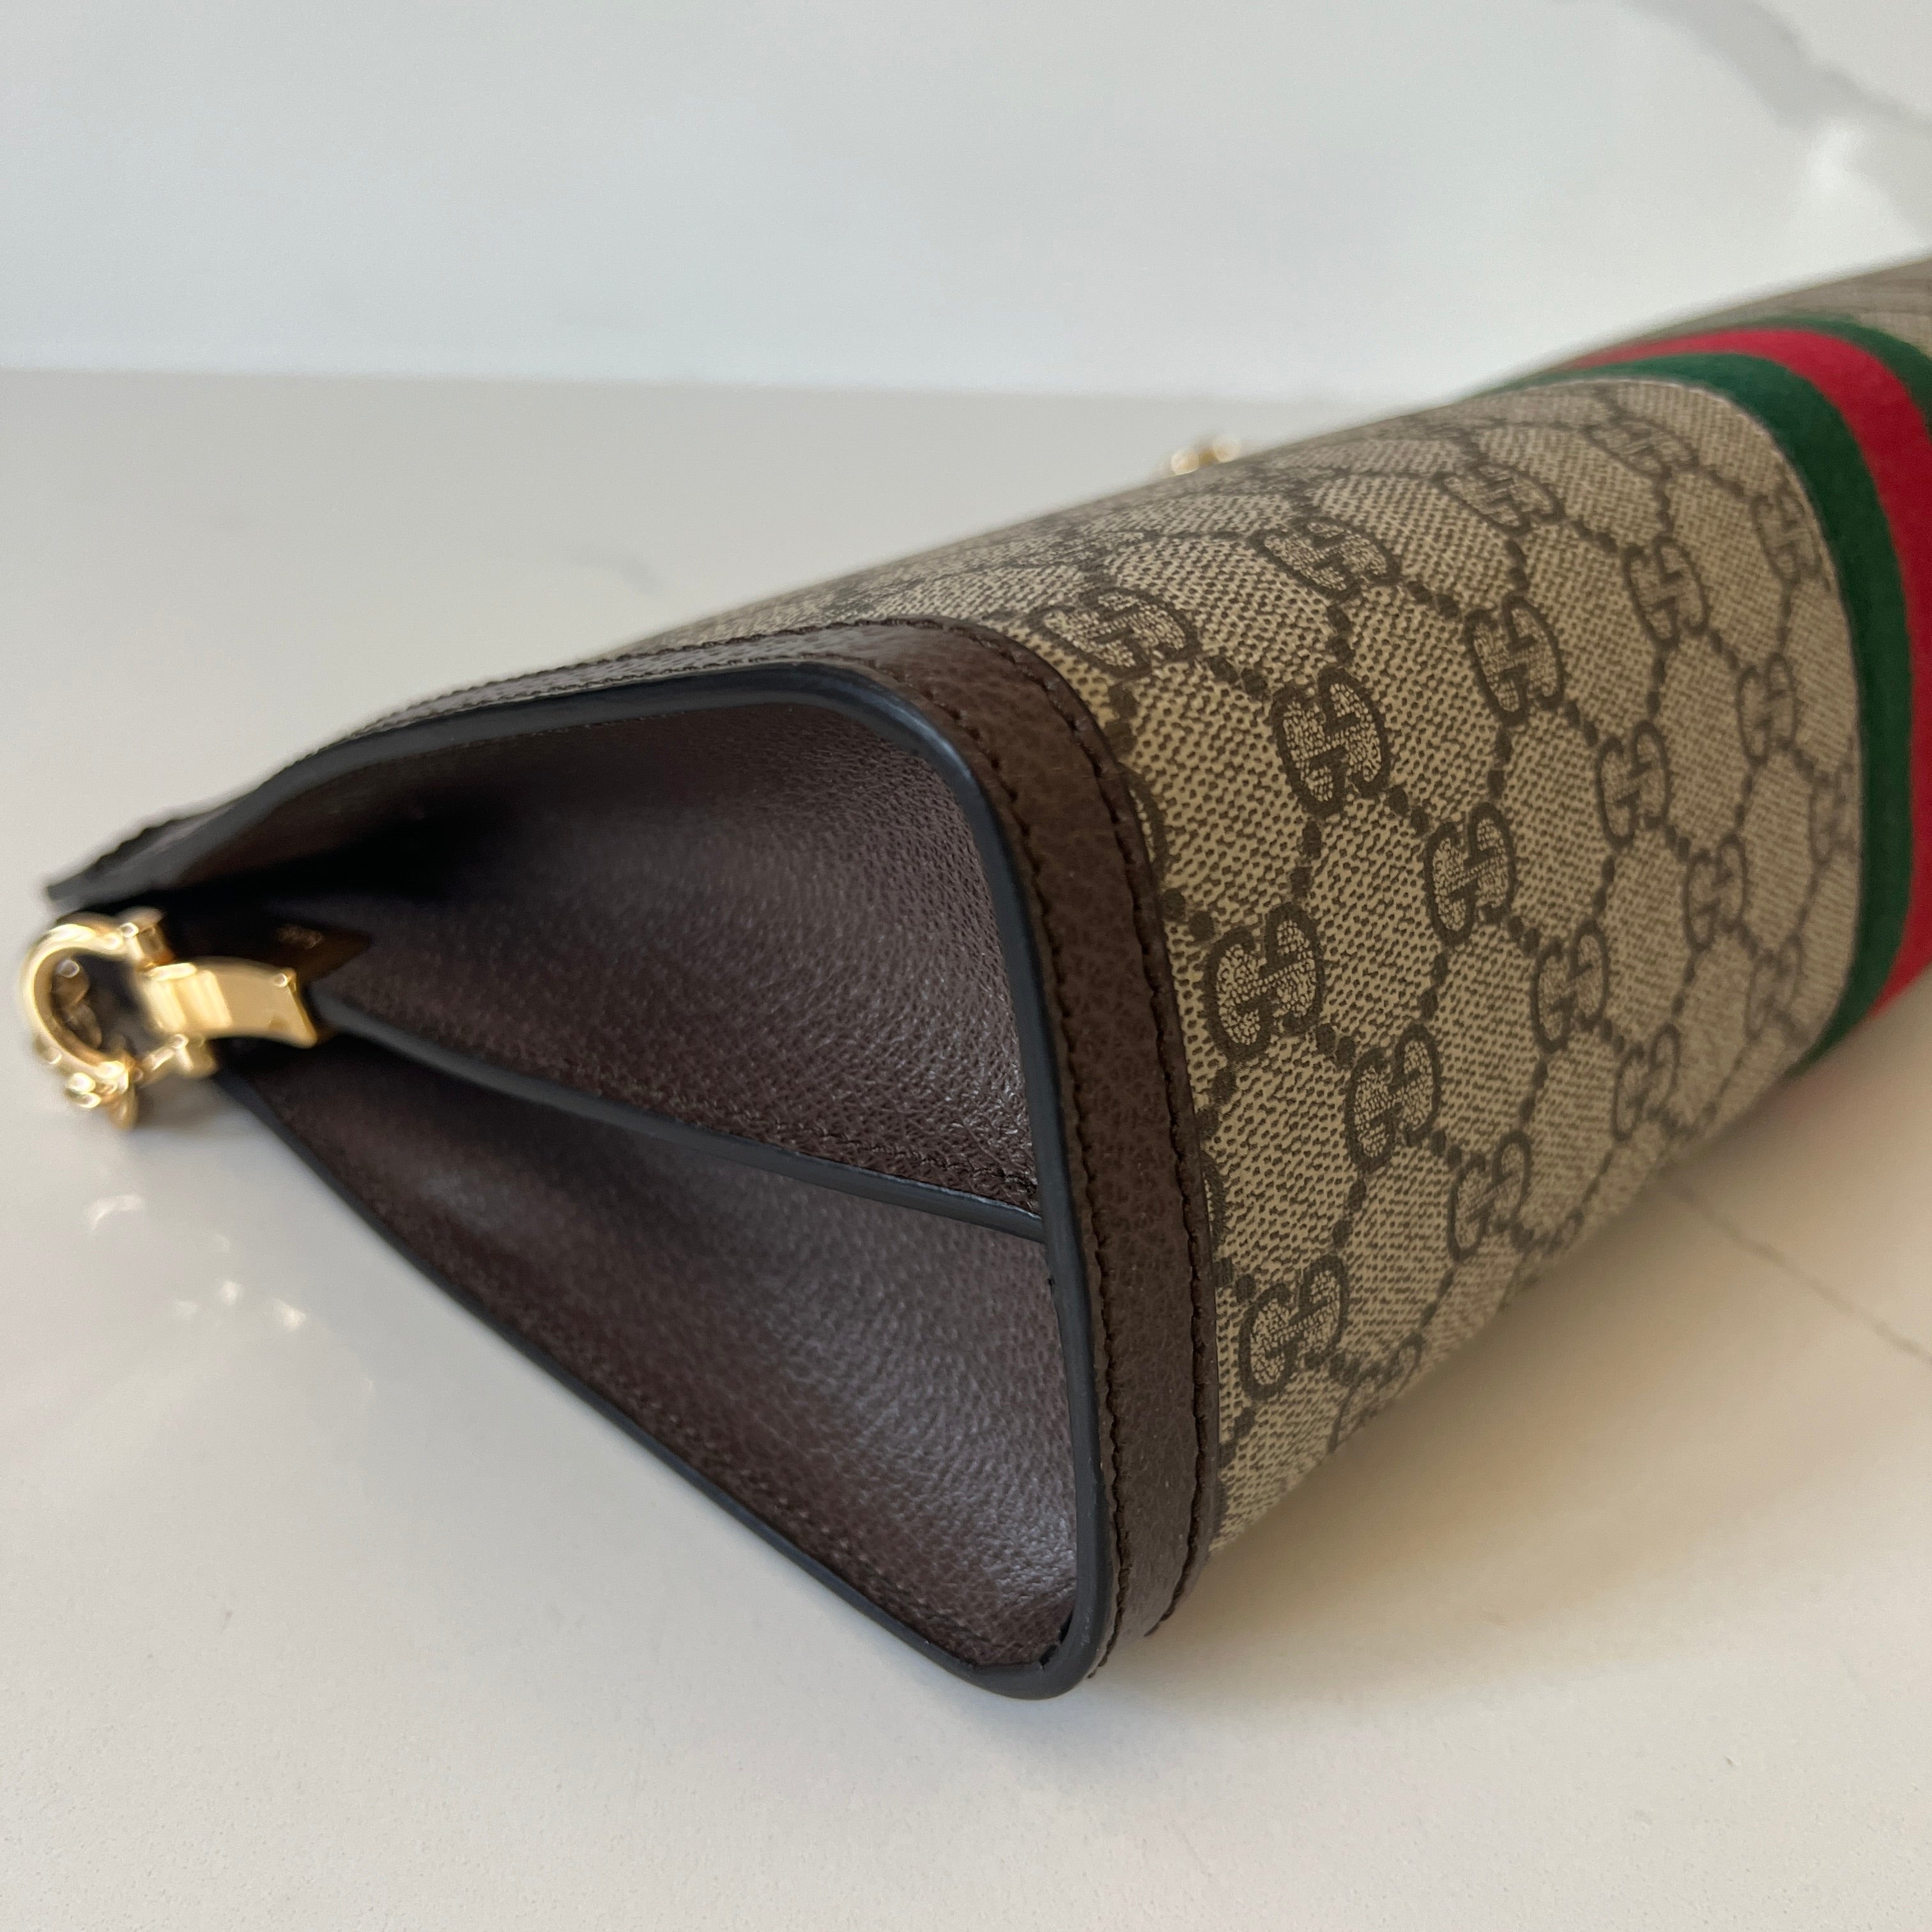 Gucci Ophidia GG Medium Shoulder Bag